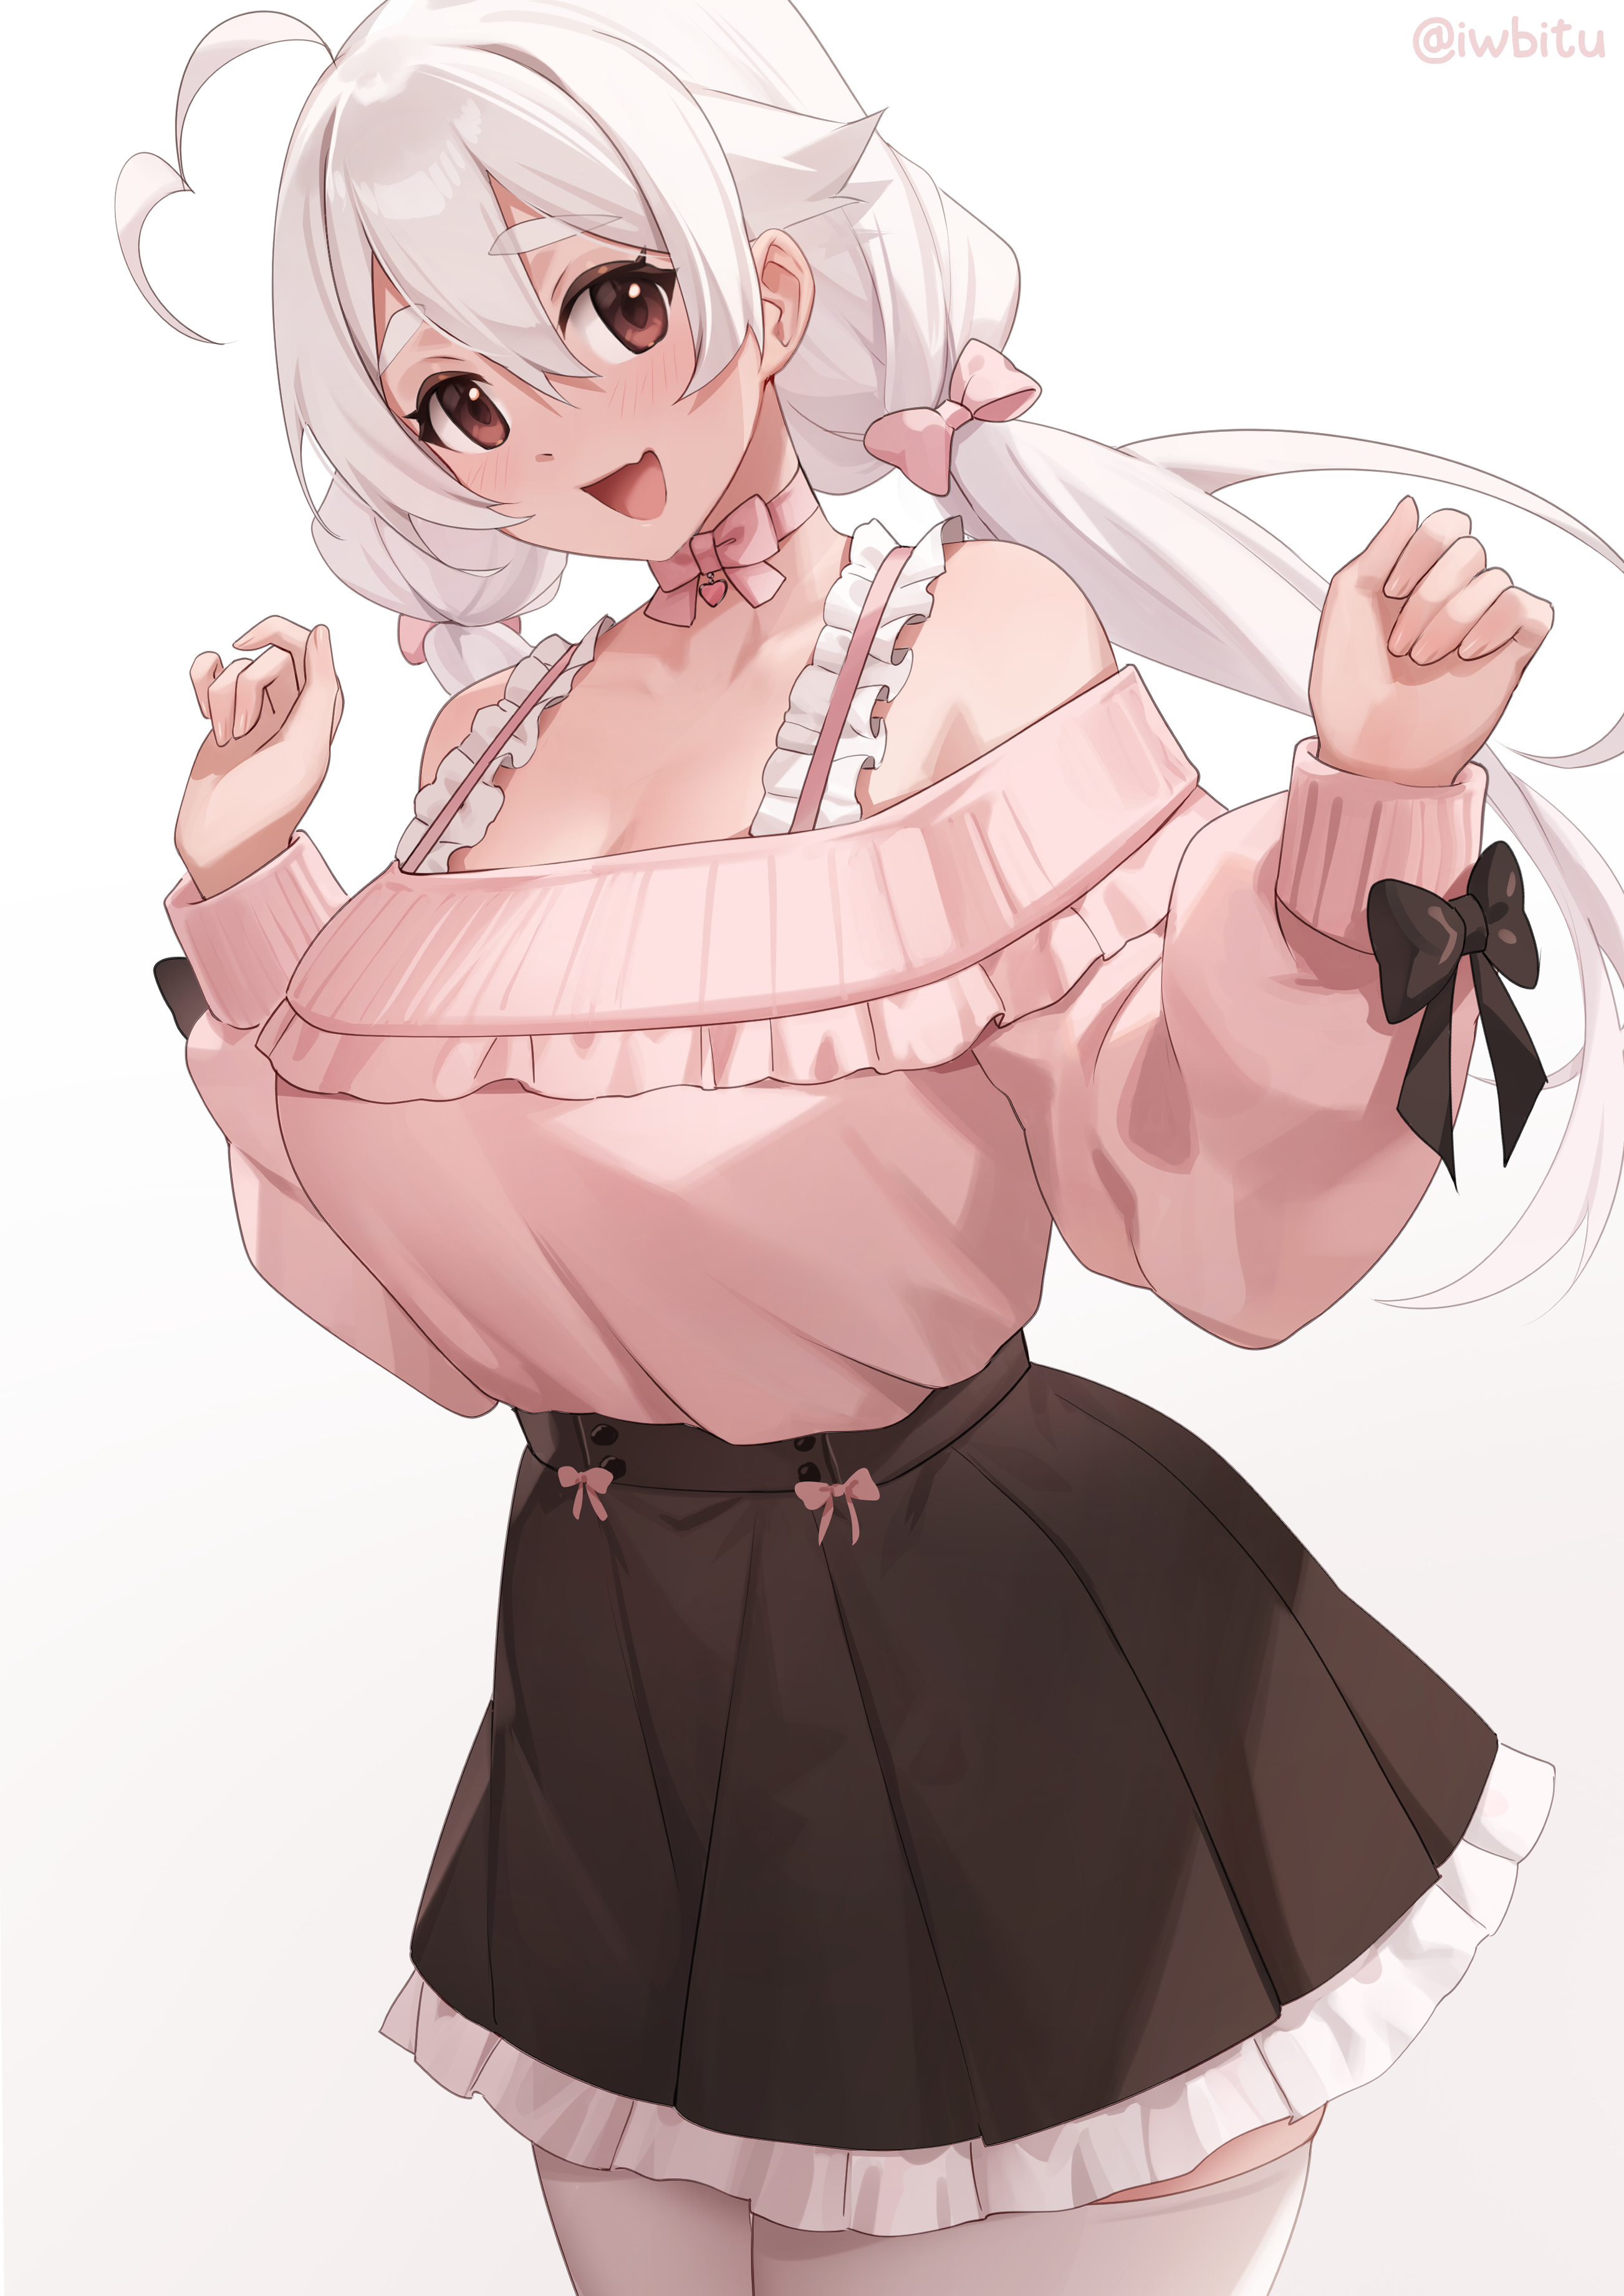 Anime Anime Girls Iwbitu Sa Silver Hair Dress 2605x3684